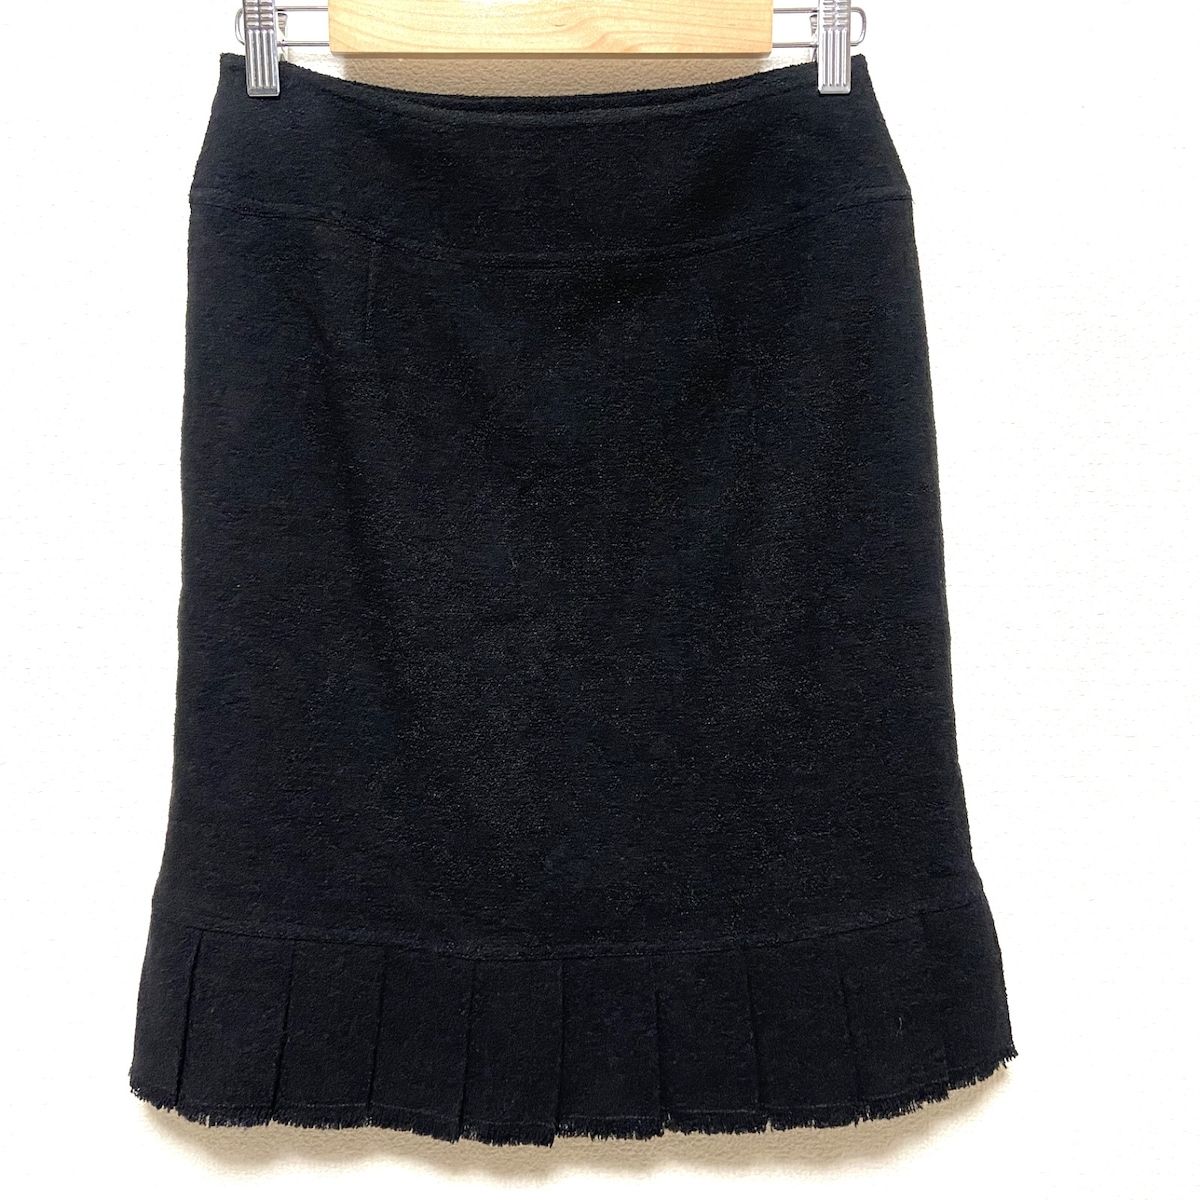 Rene(ルネ) スカート サイズ36 S レディース美品 - 黒 ひざ丈 - メルカリ